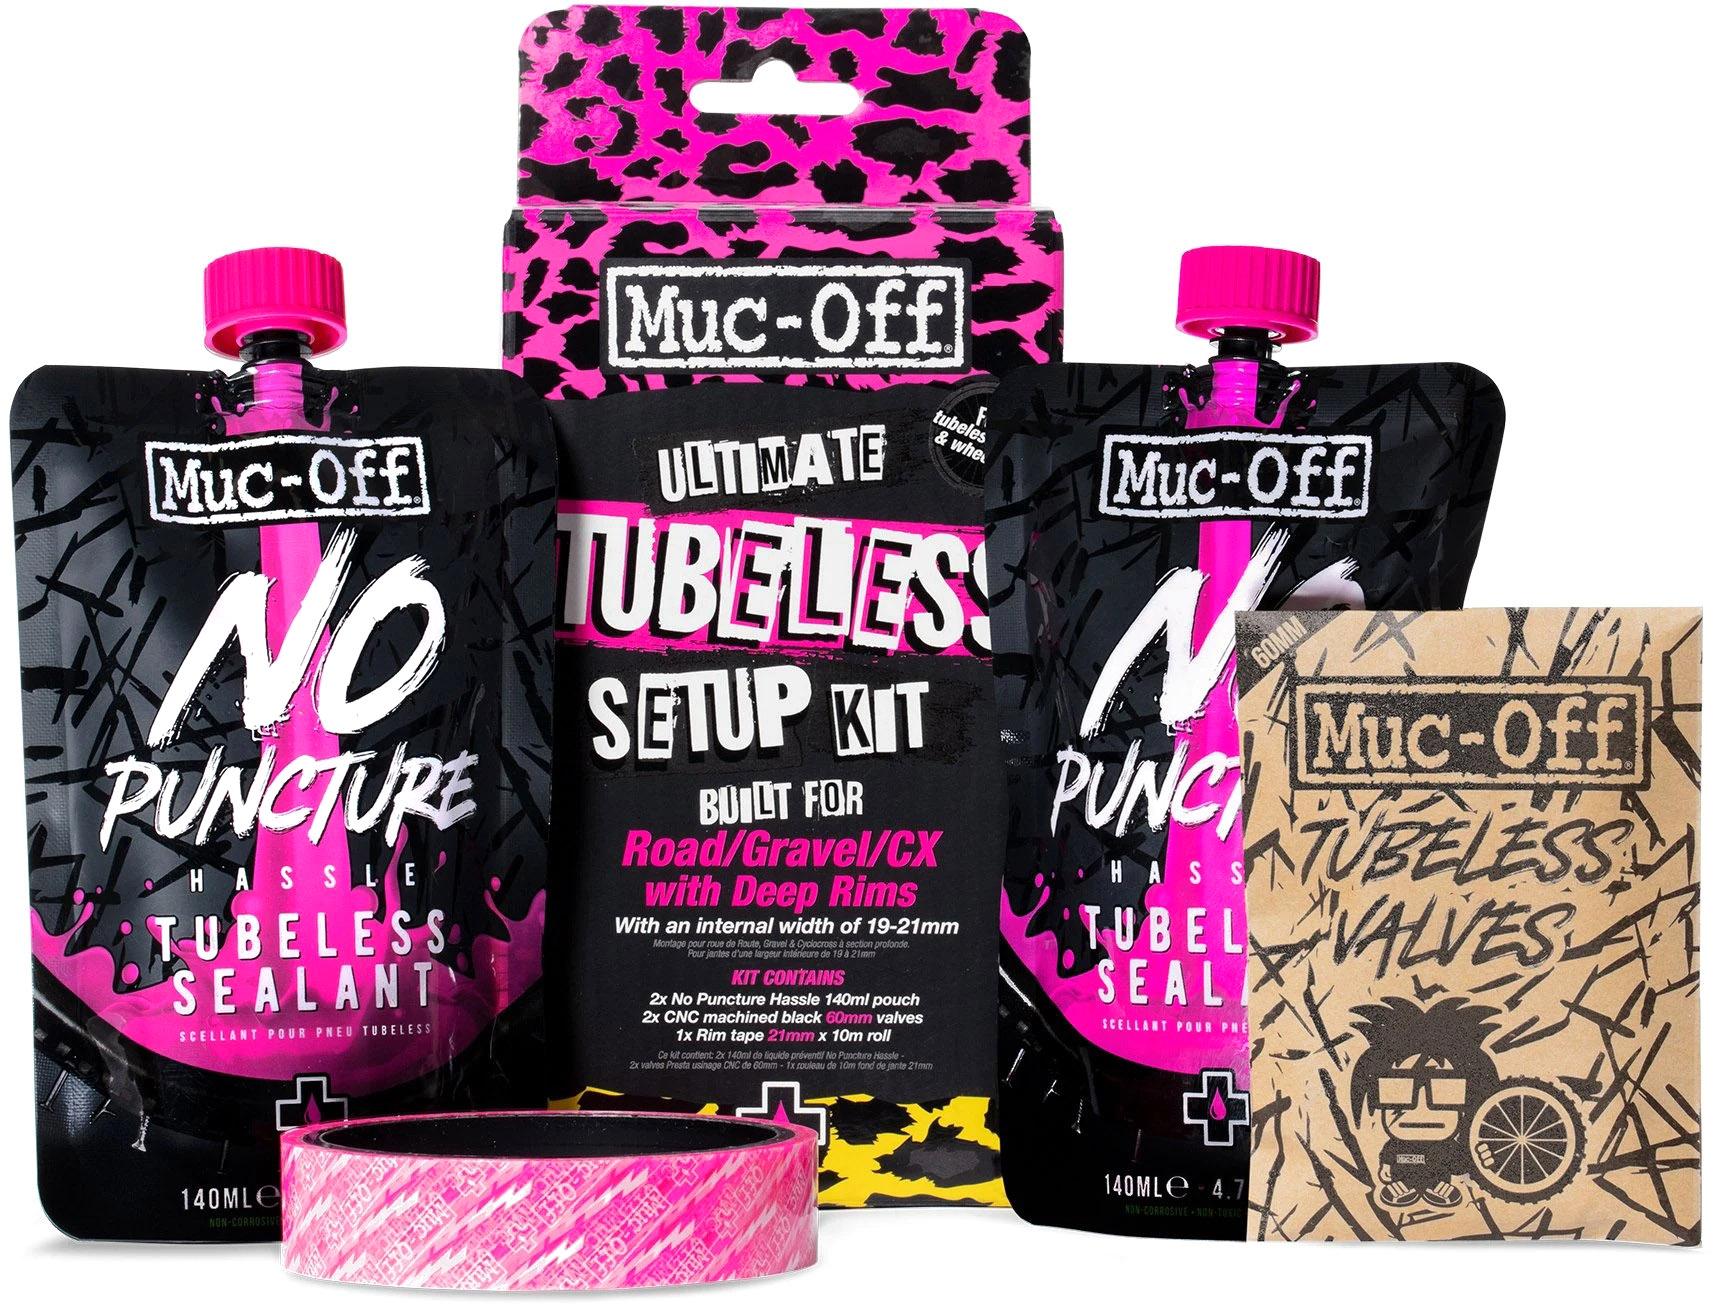 Muc-off Ultimate Tubeless Xc/gravel Setup Kit - Black/pink